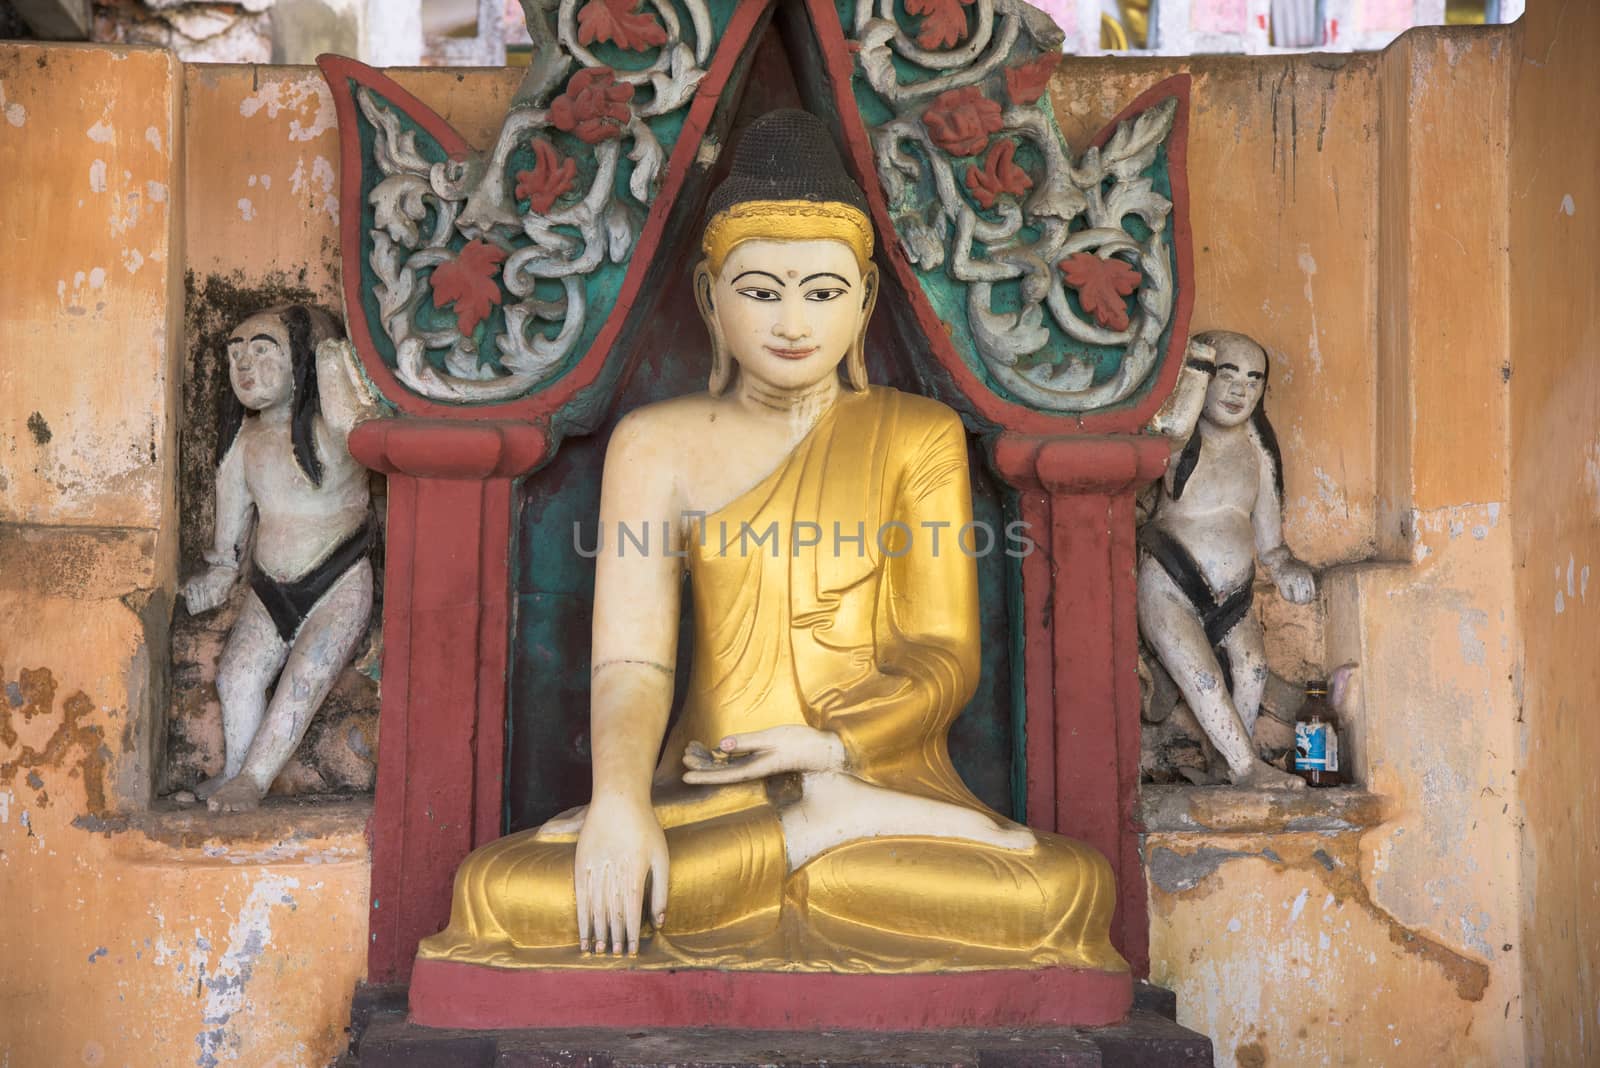 Buddha image at The Wut Tite Kyoung Par Yi Yat Ti Sar Thin Tite Buddhist temple in Myeik, Tanintharyi Region, Southern Myanmar